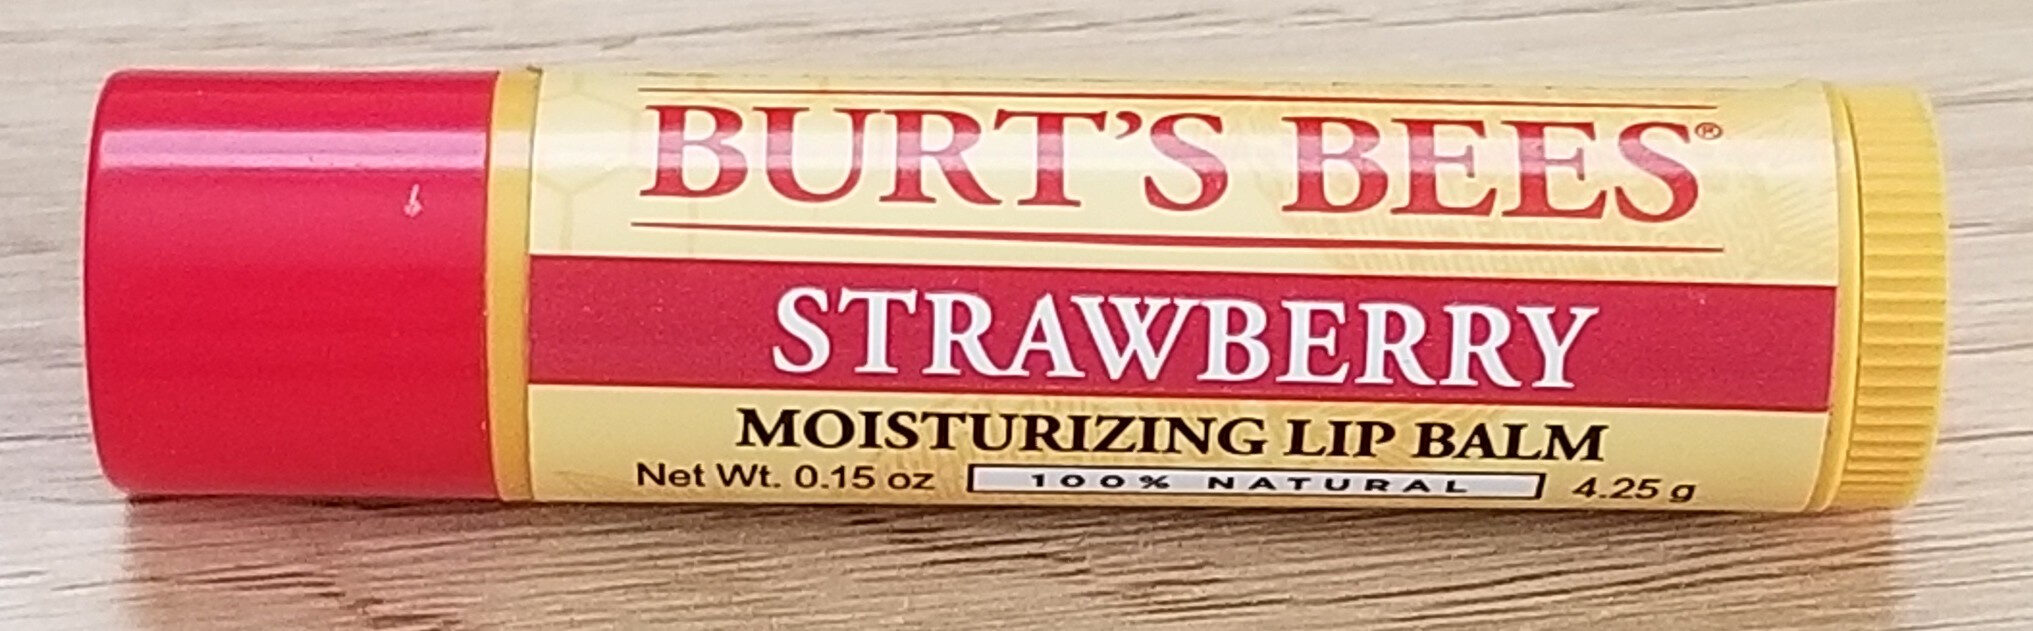 Strawberry Moisturizing Lip Balm - Product - en